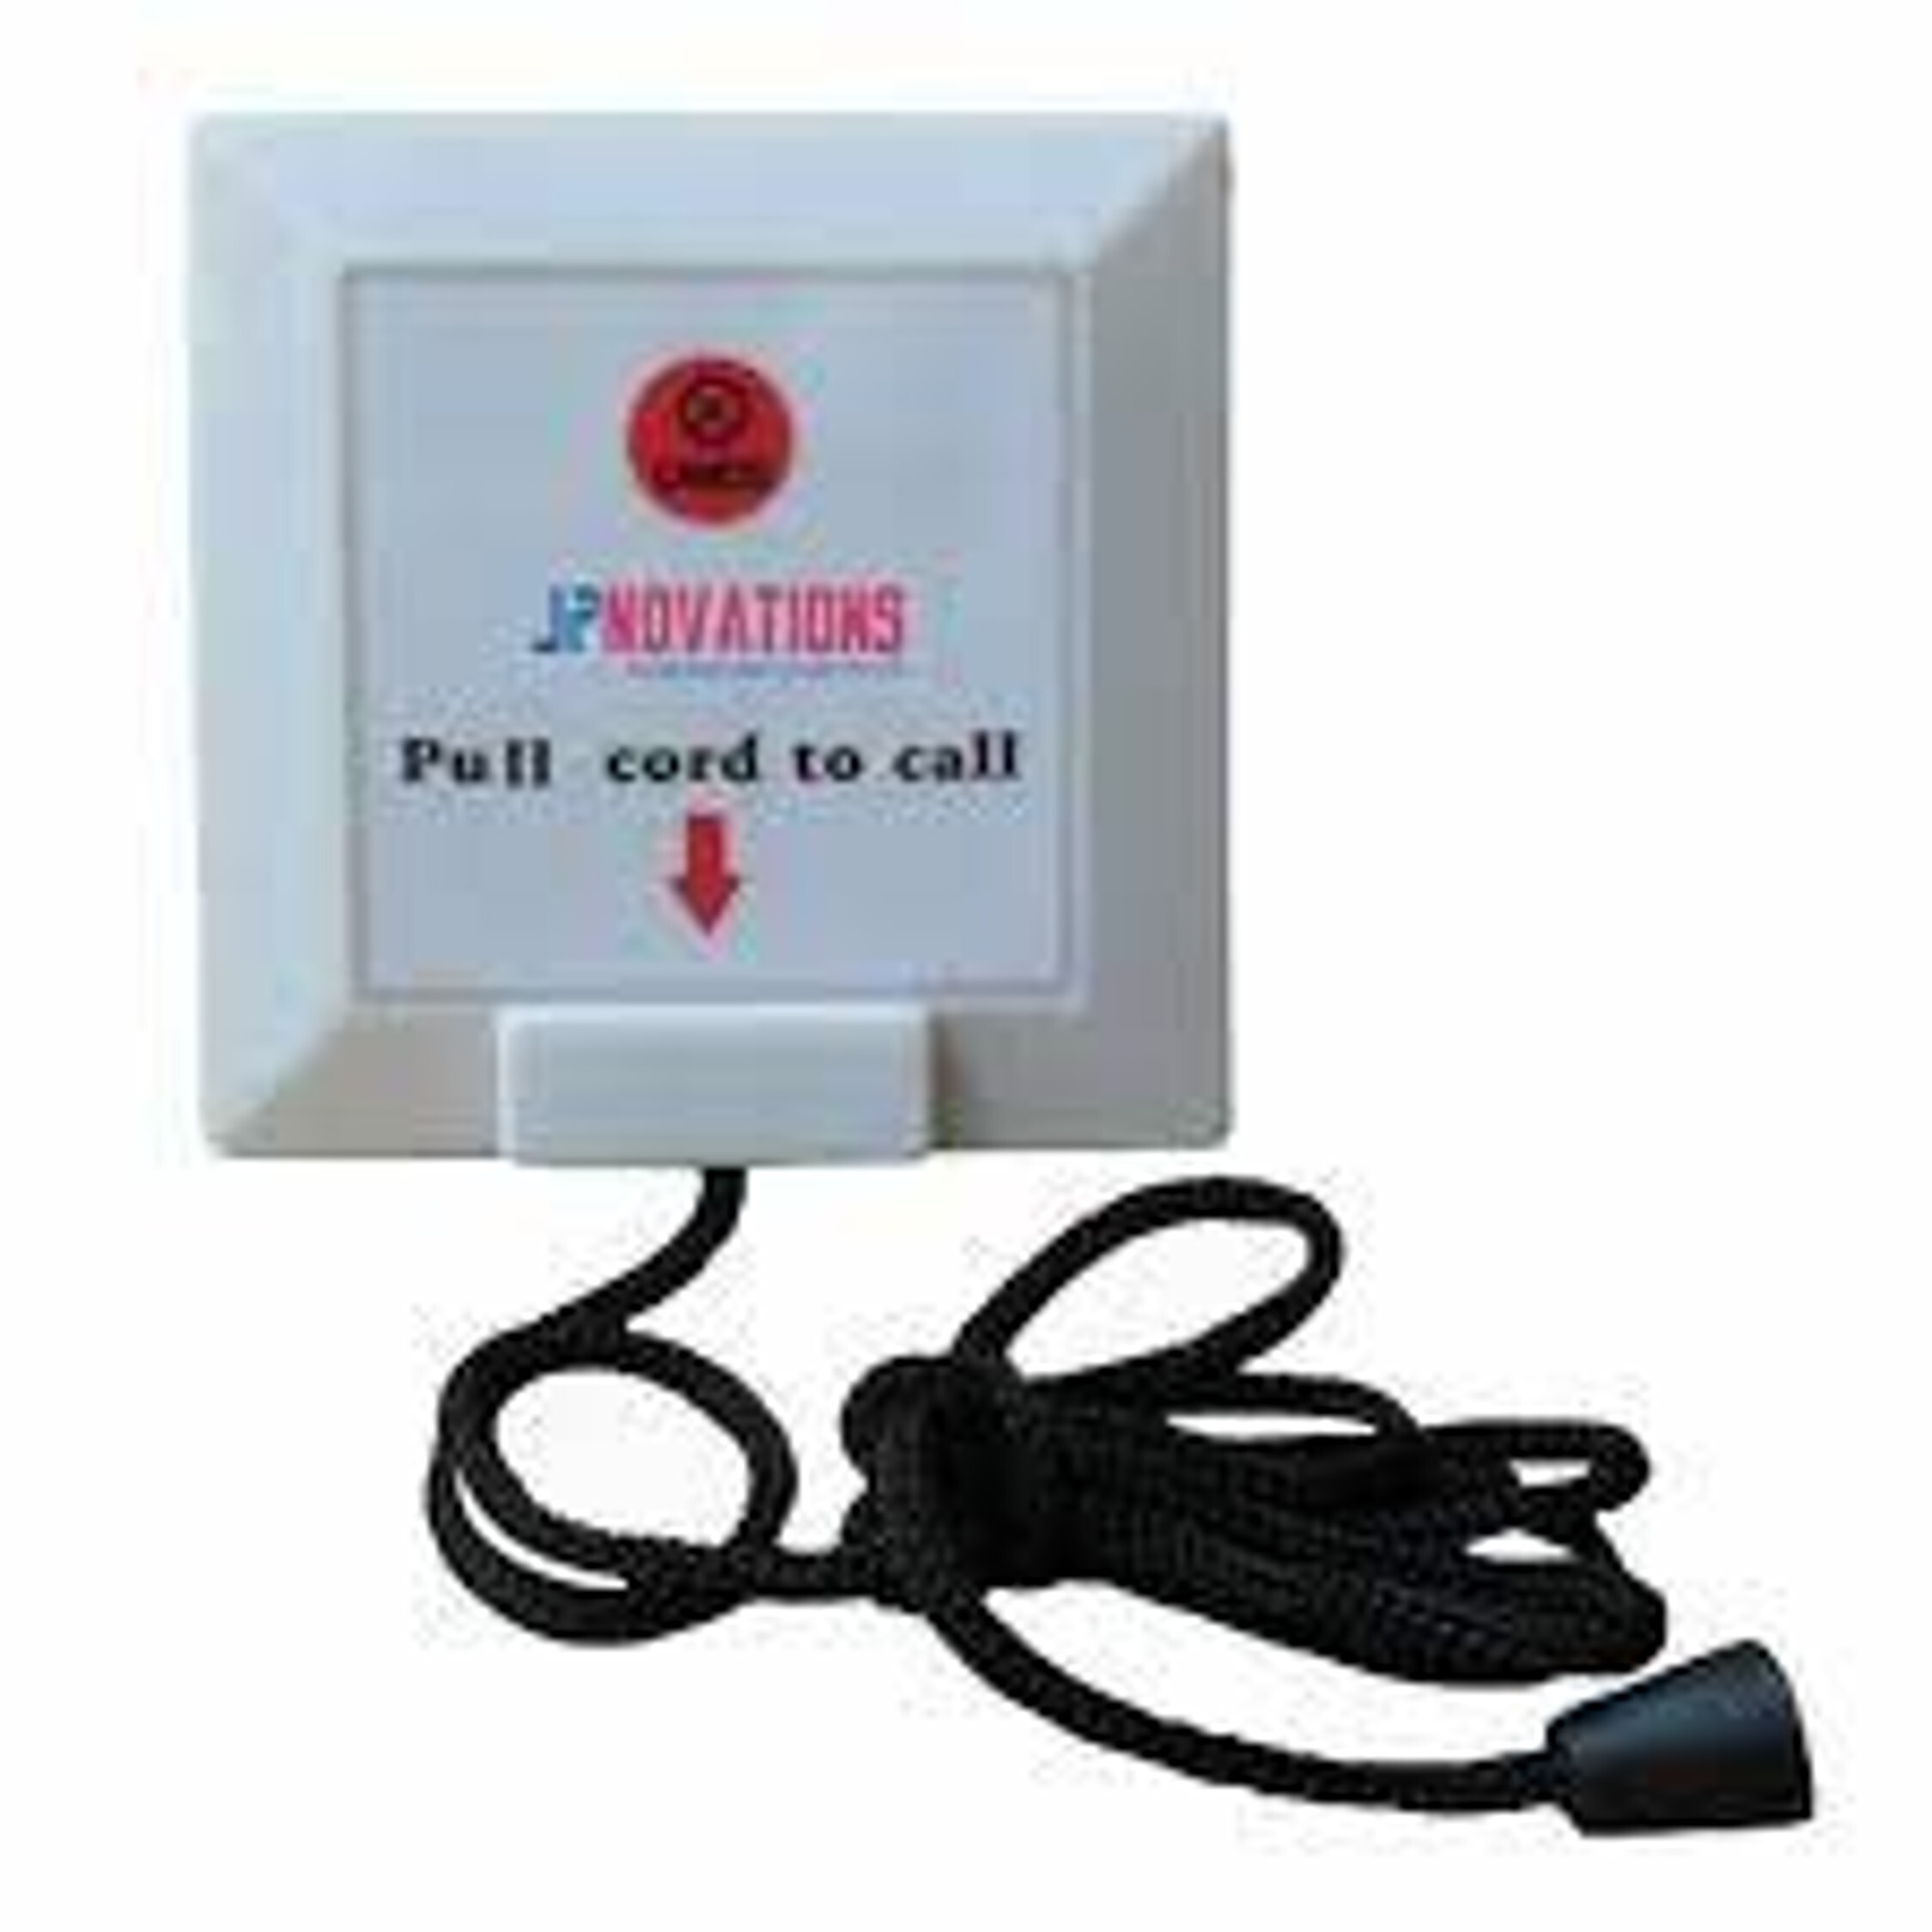 Nurse call bell system 2 key Wall Mount Button SB7-2XBK